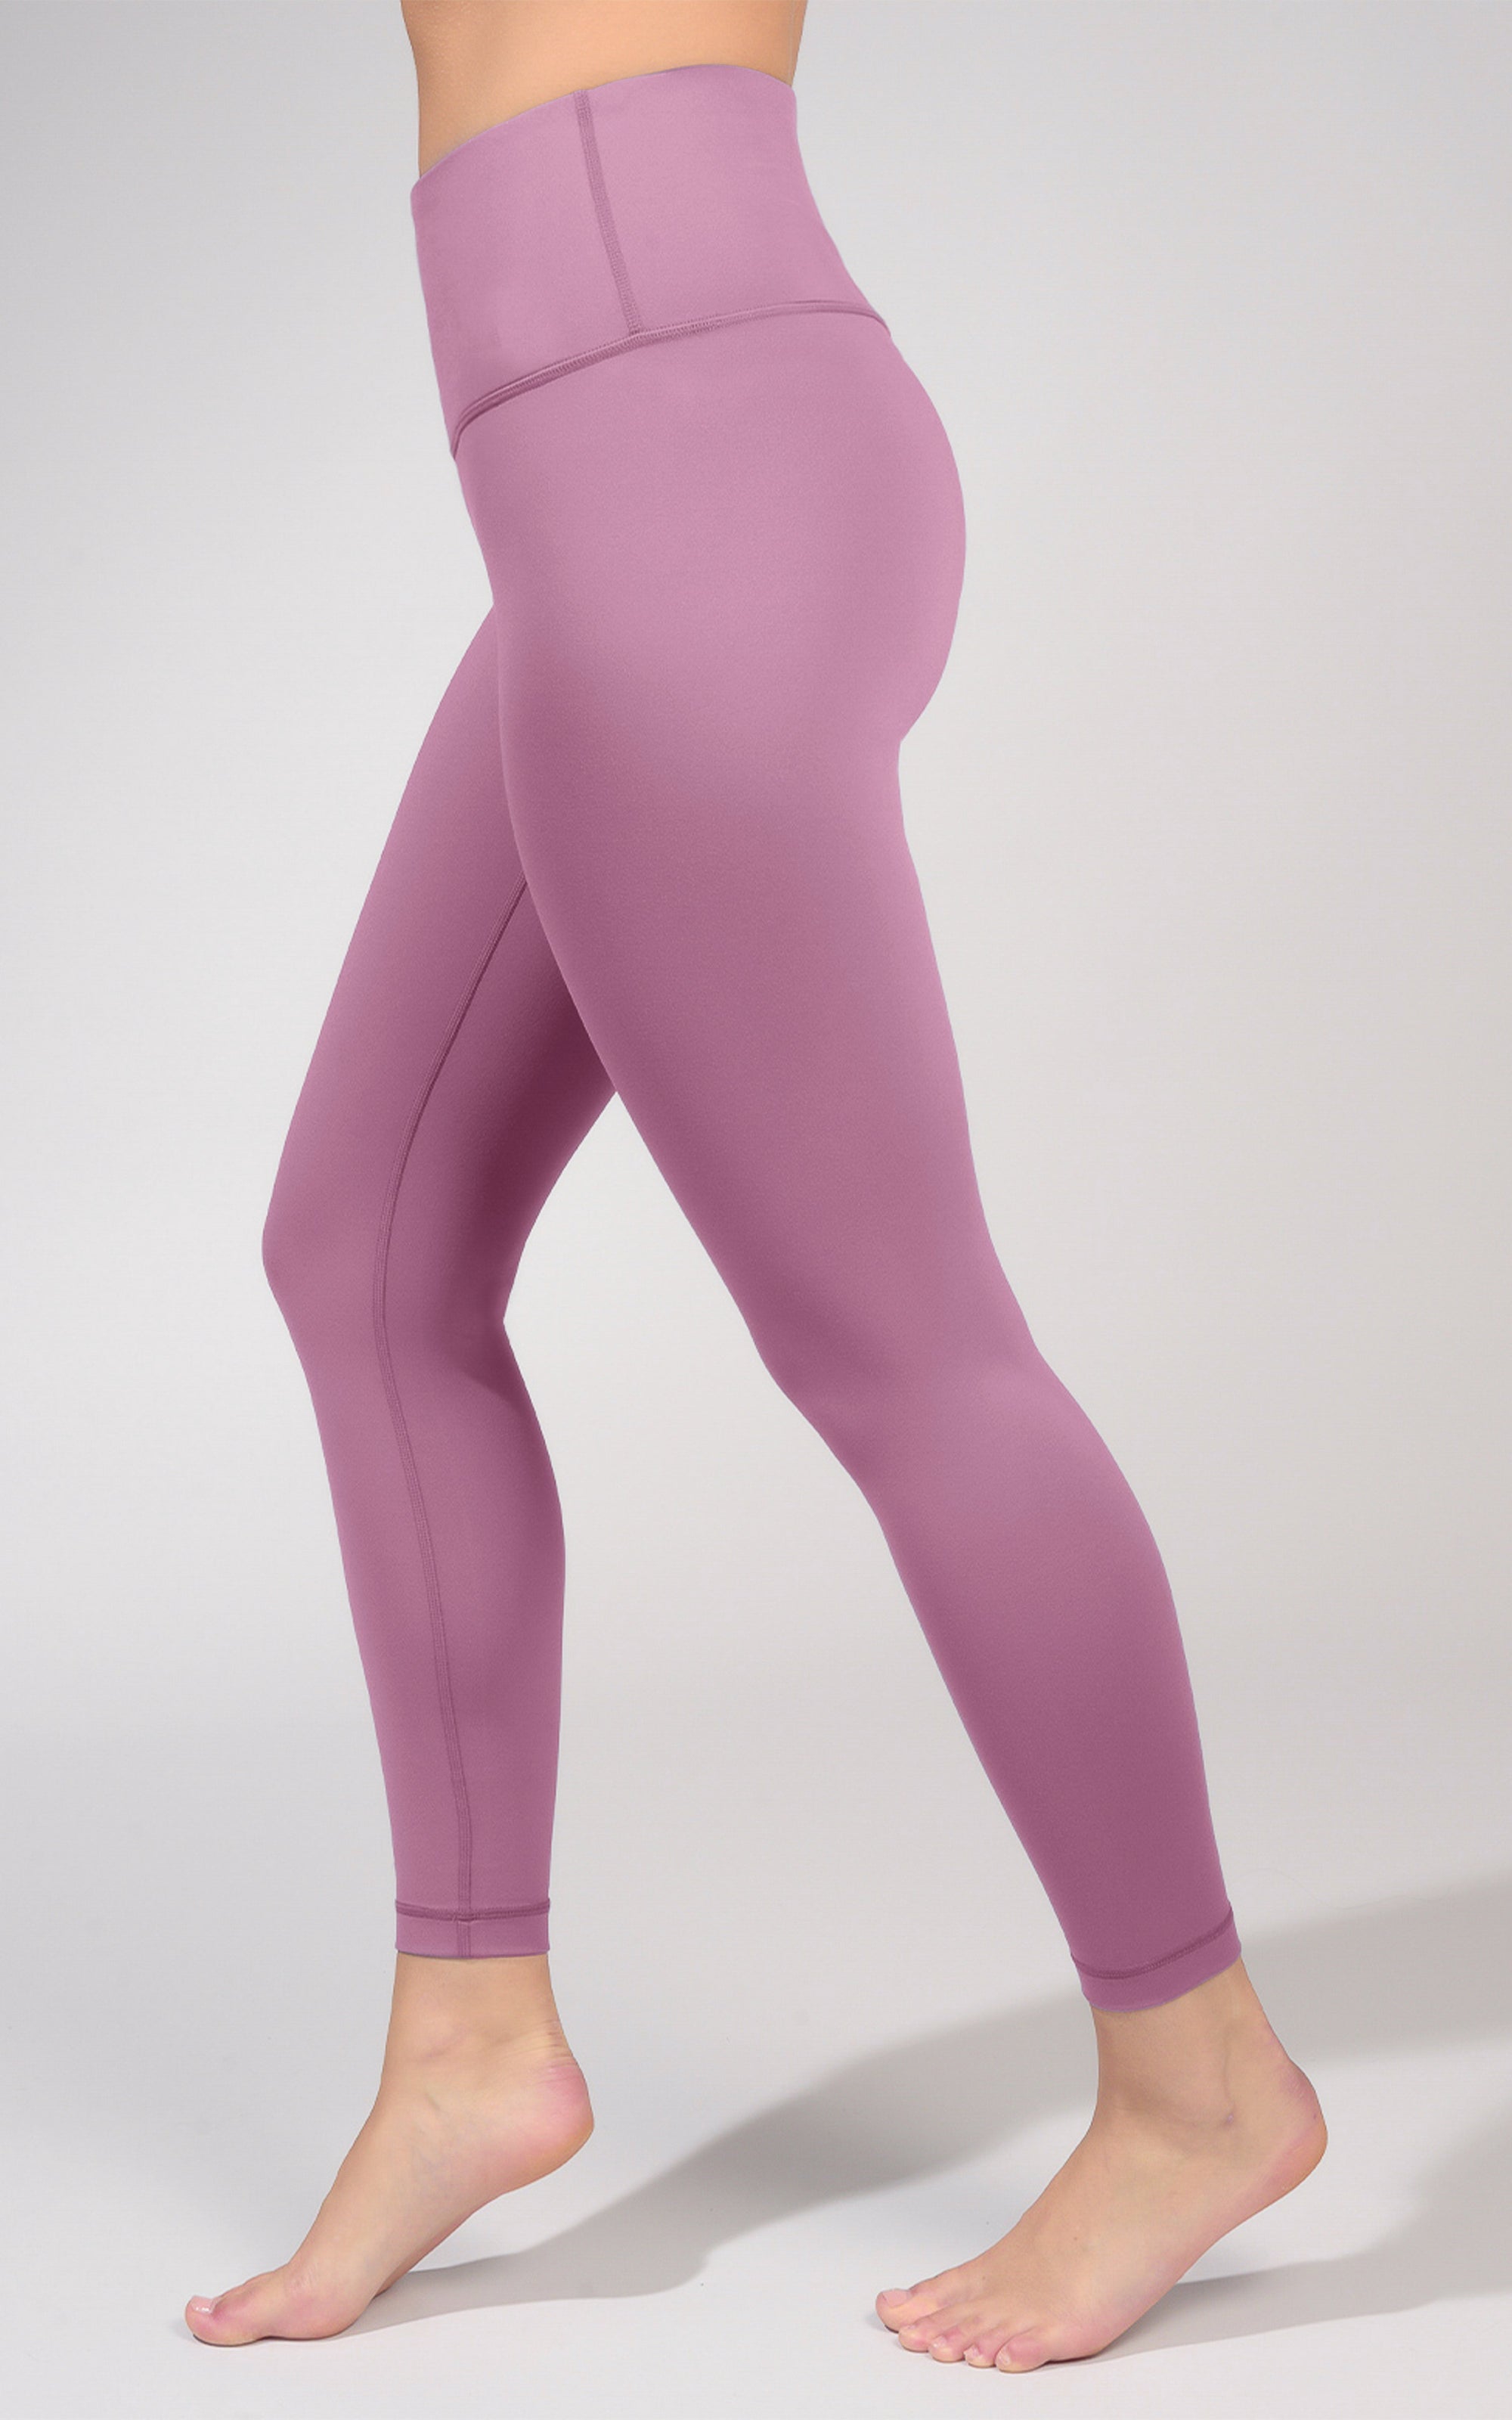 Lou & Grey Leggings Women's Large Light Purple Lilac Zip Ankle Stretch Pants